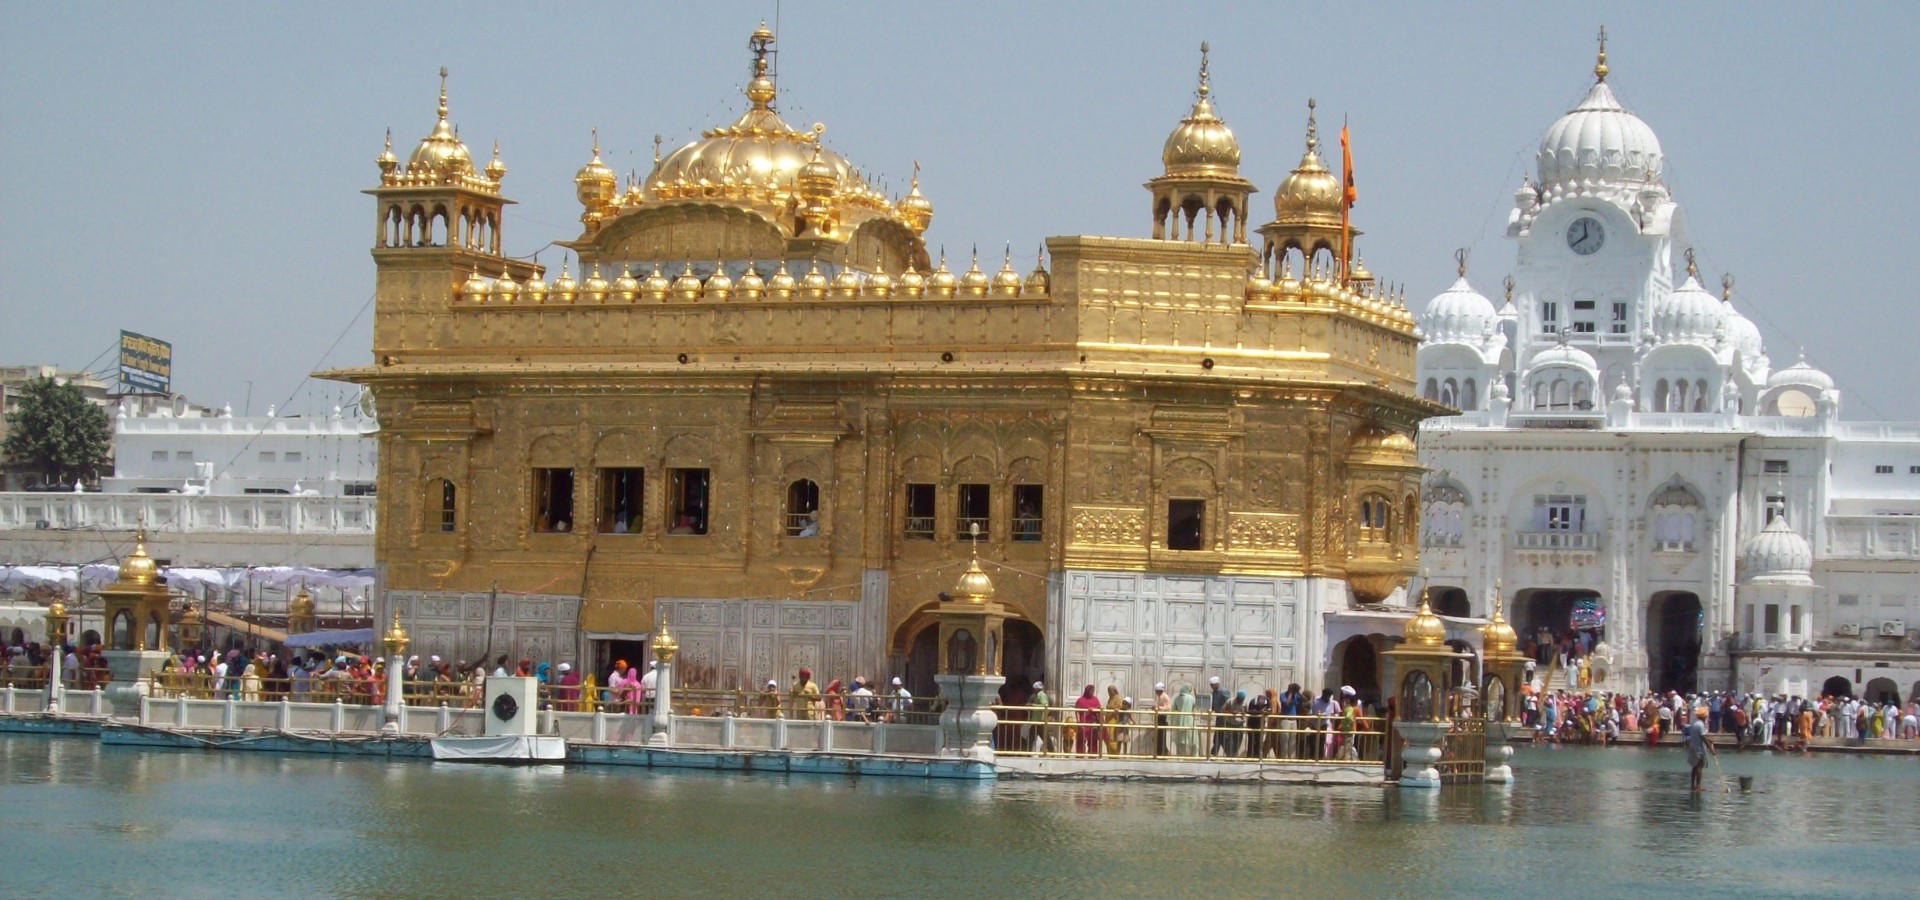 amritsar as a tourist destination